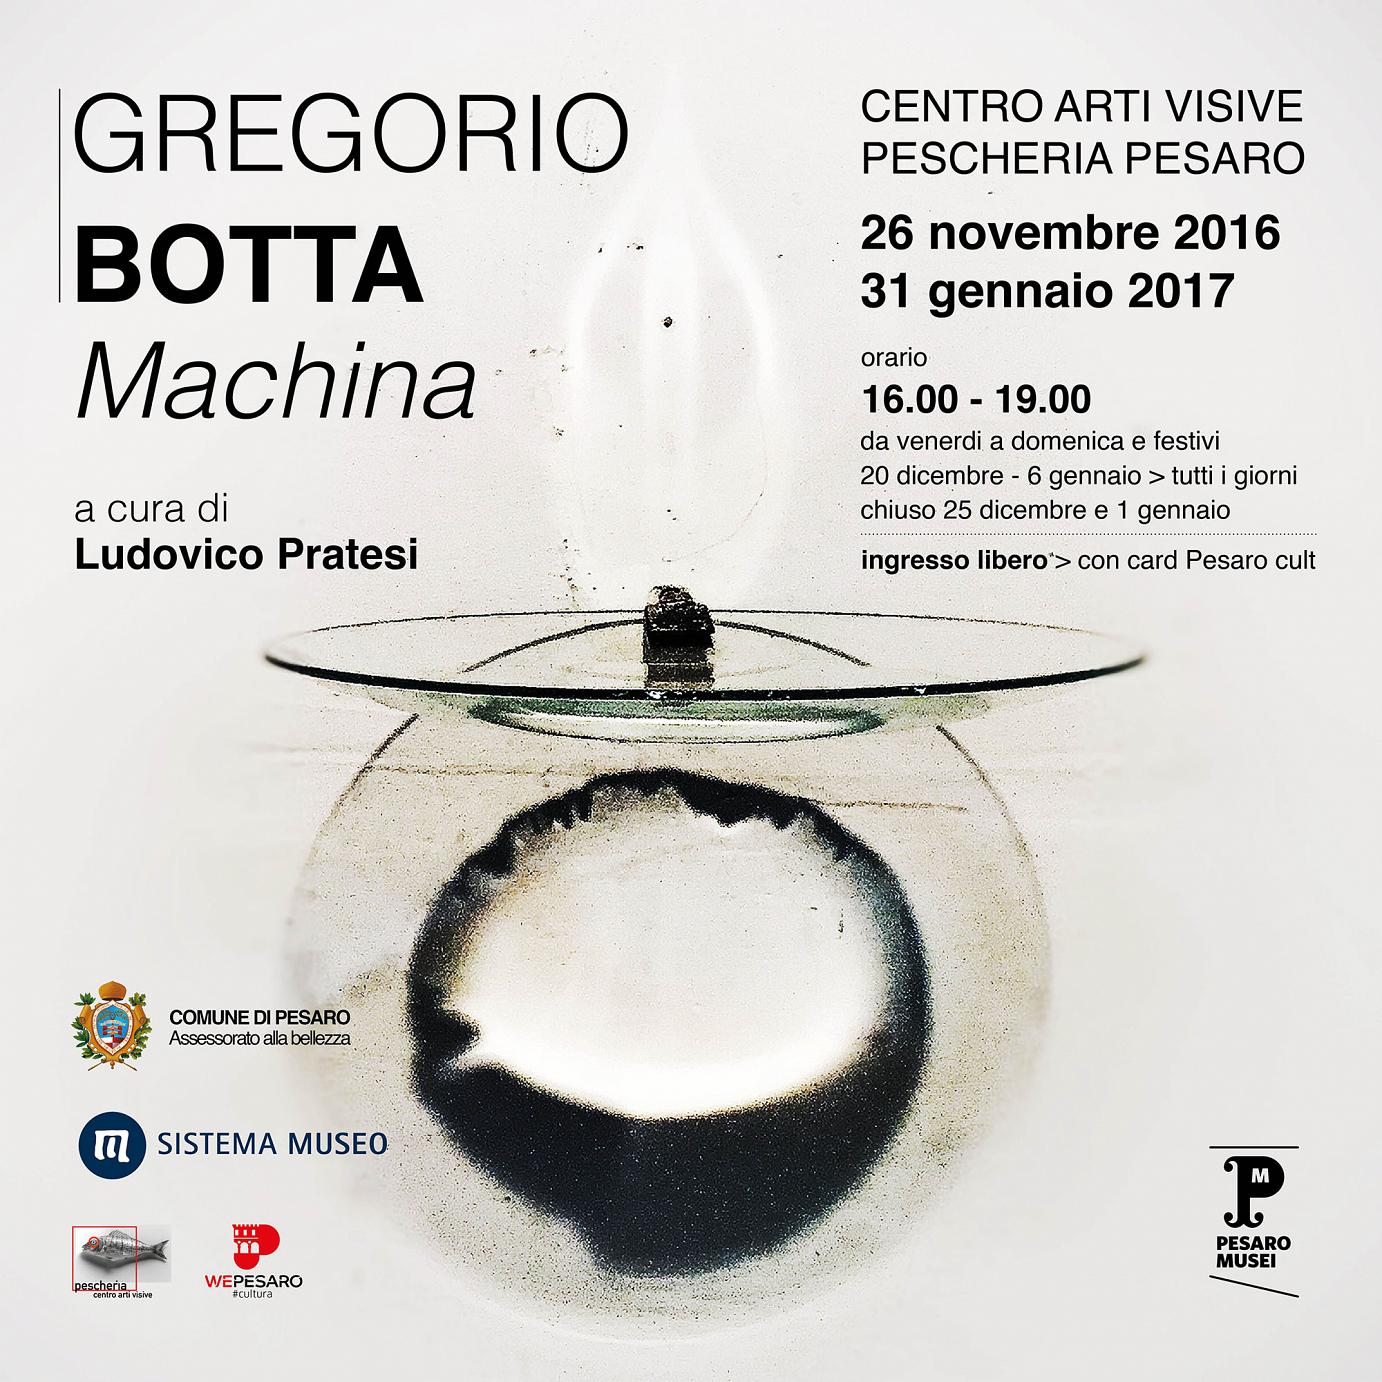 Gregorio Botta Machina2